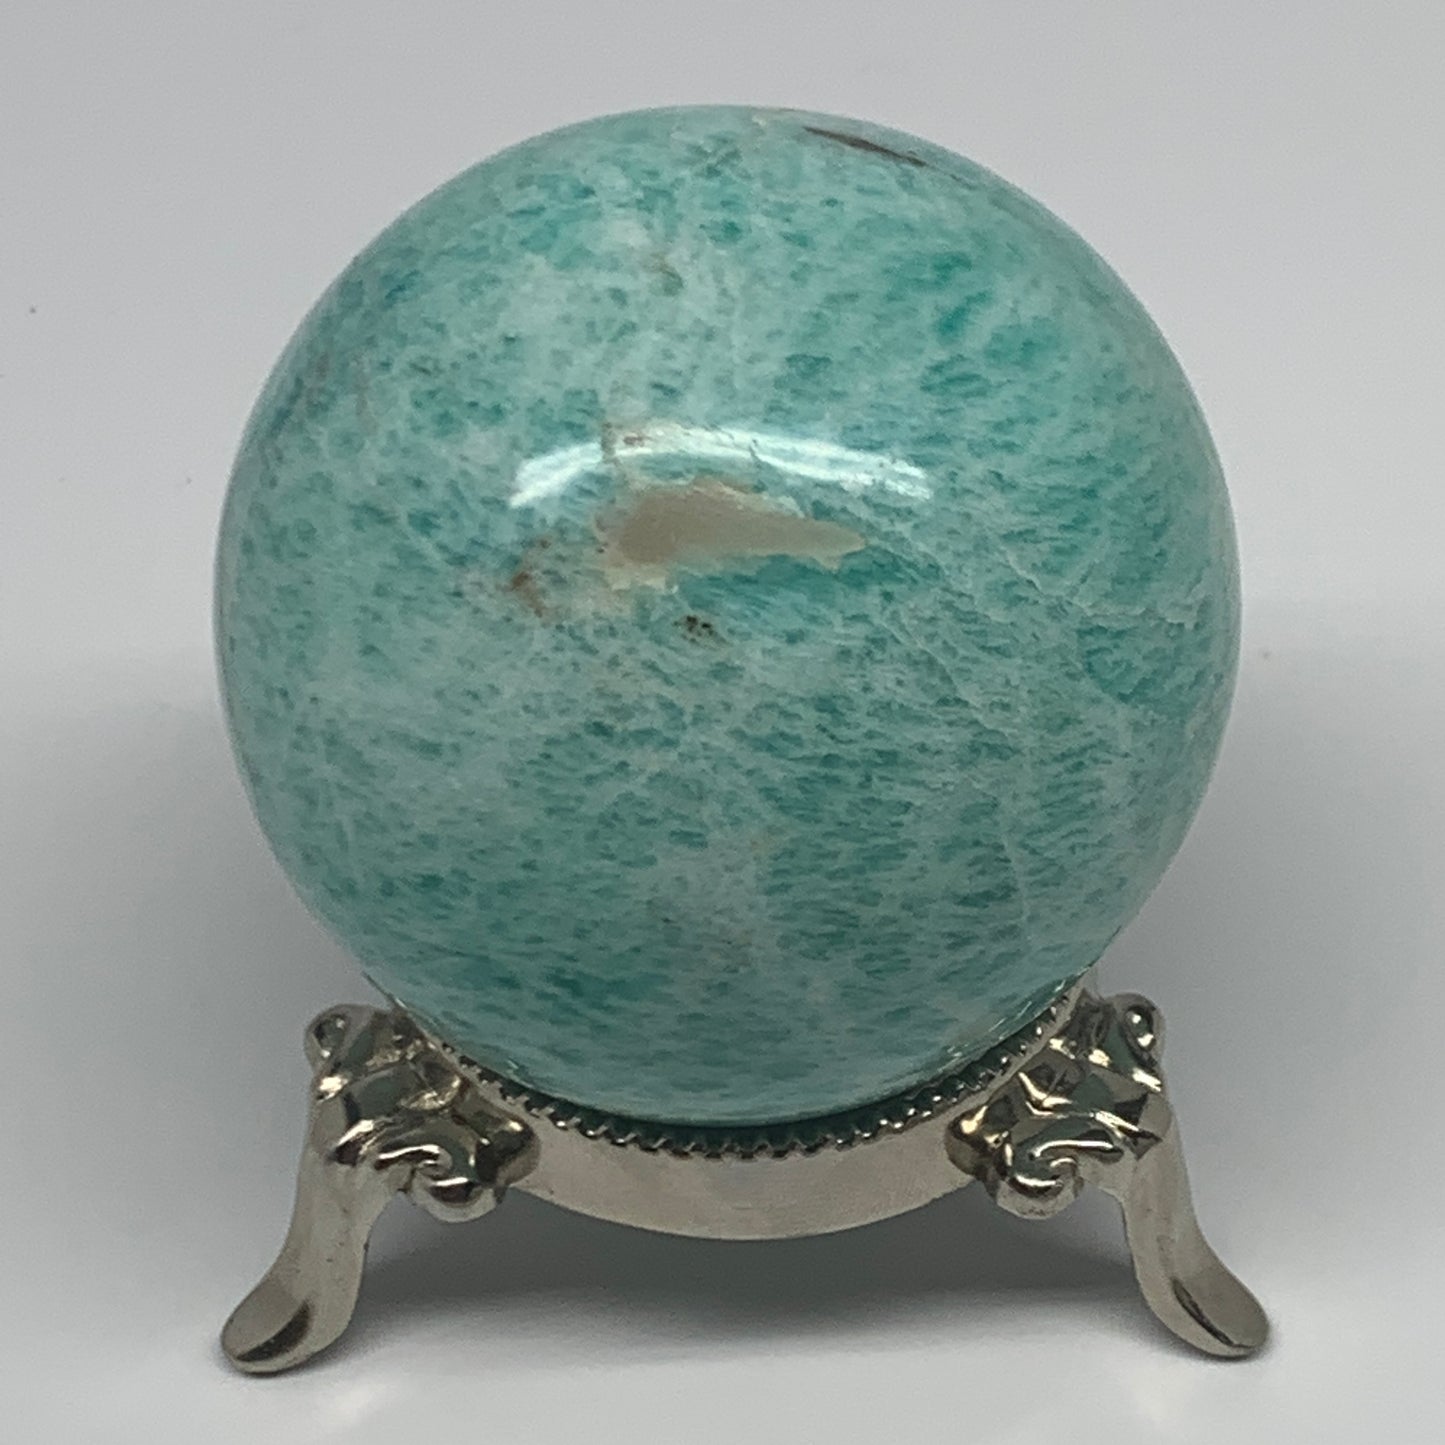 293.8g, 2.4" (60mm), Amazonite Sphere Ball Gemstone from Madagascar, B15785